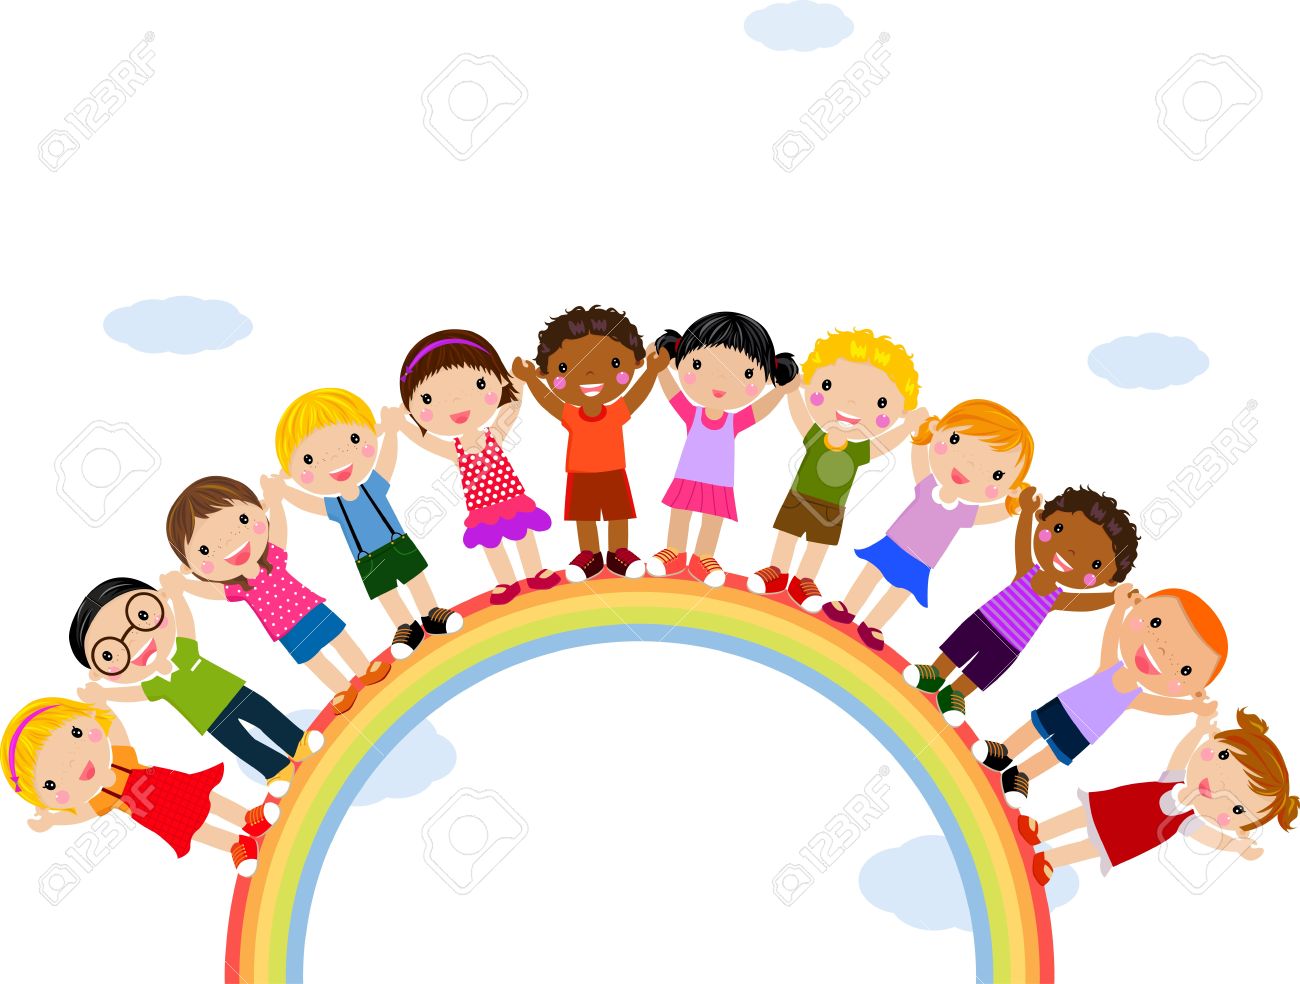 Rainbow clipart for kids